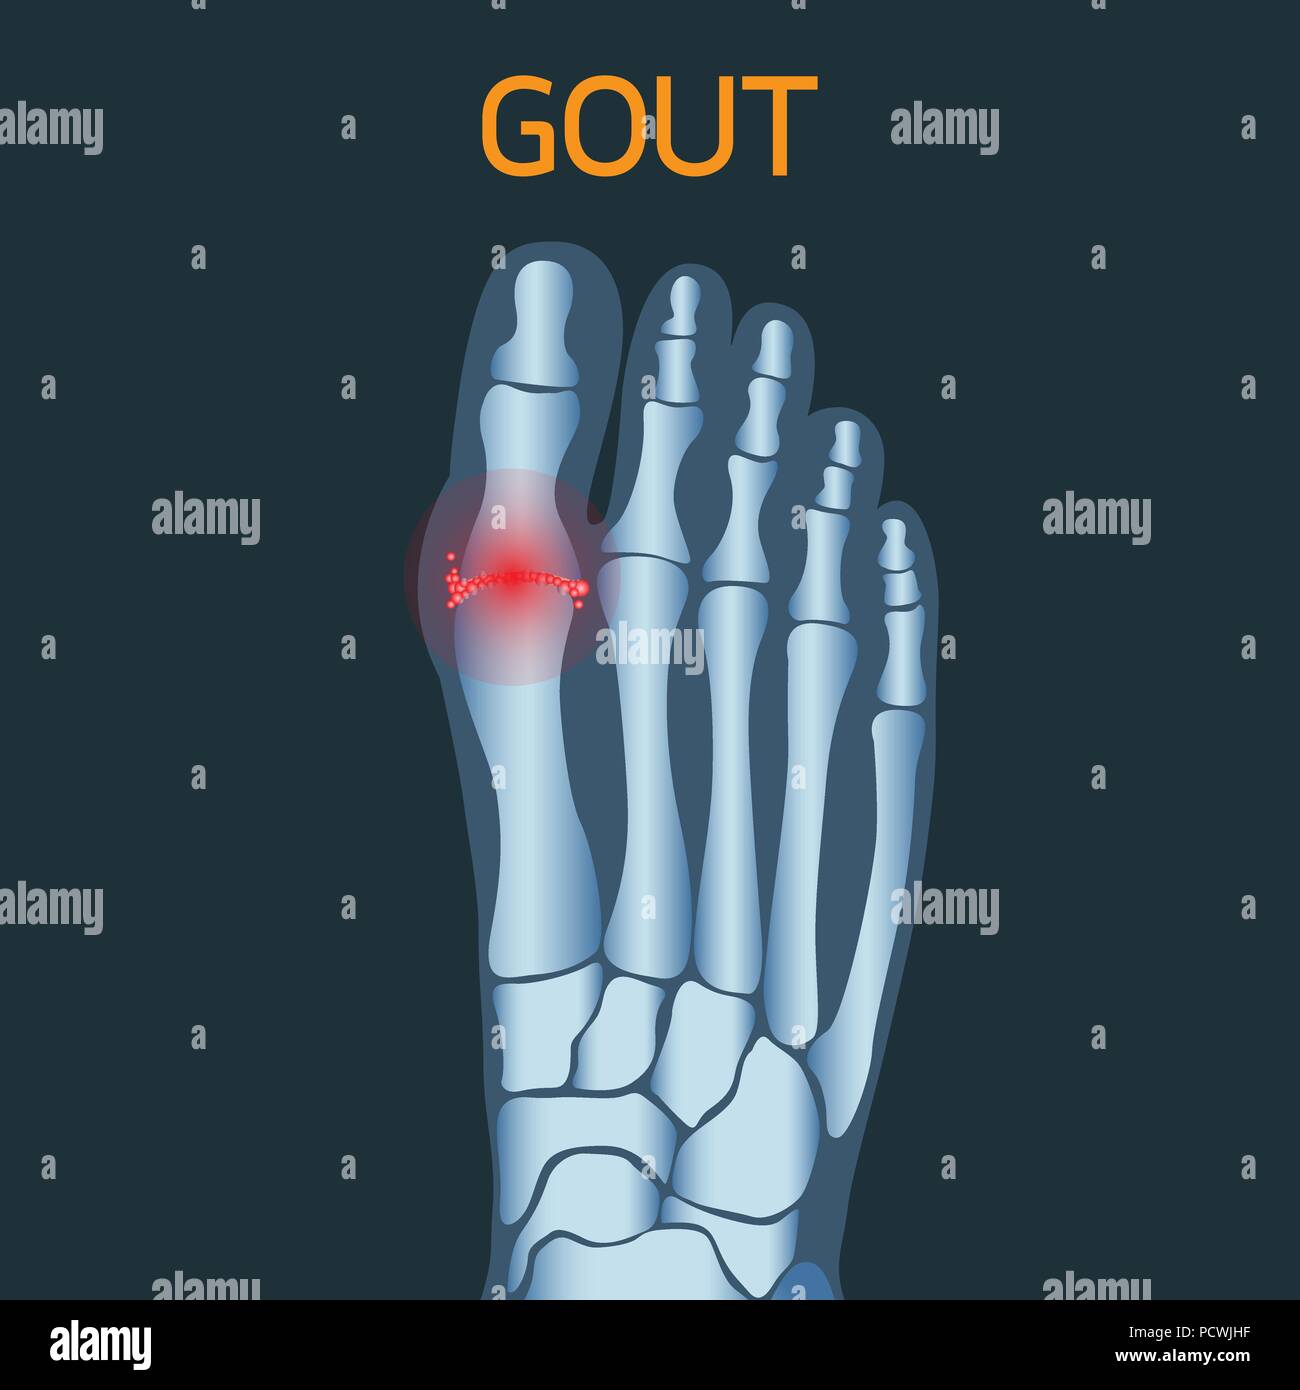 Gout vector logo icon illustration Stock Vector